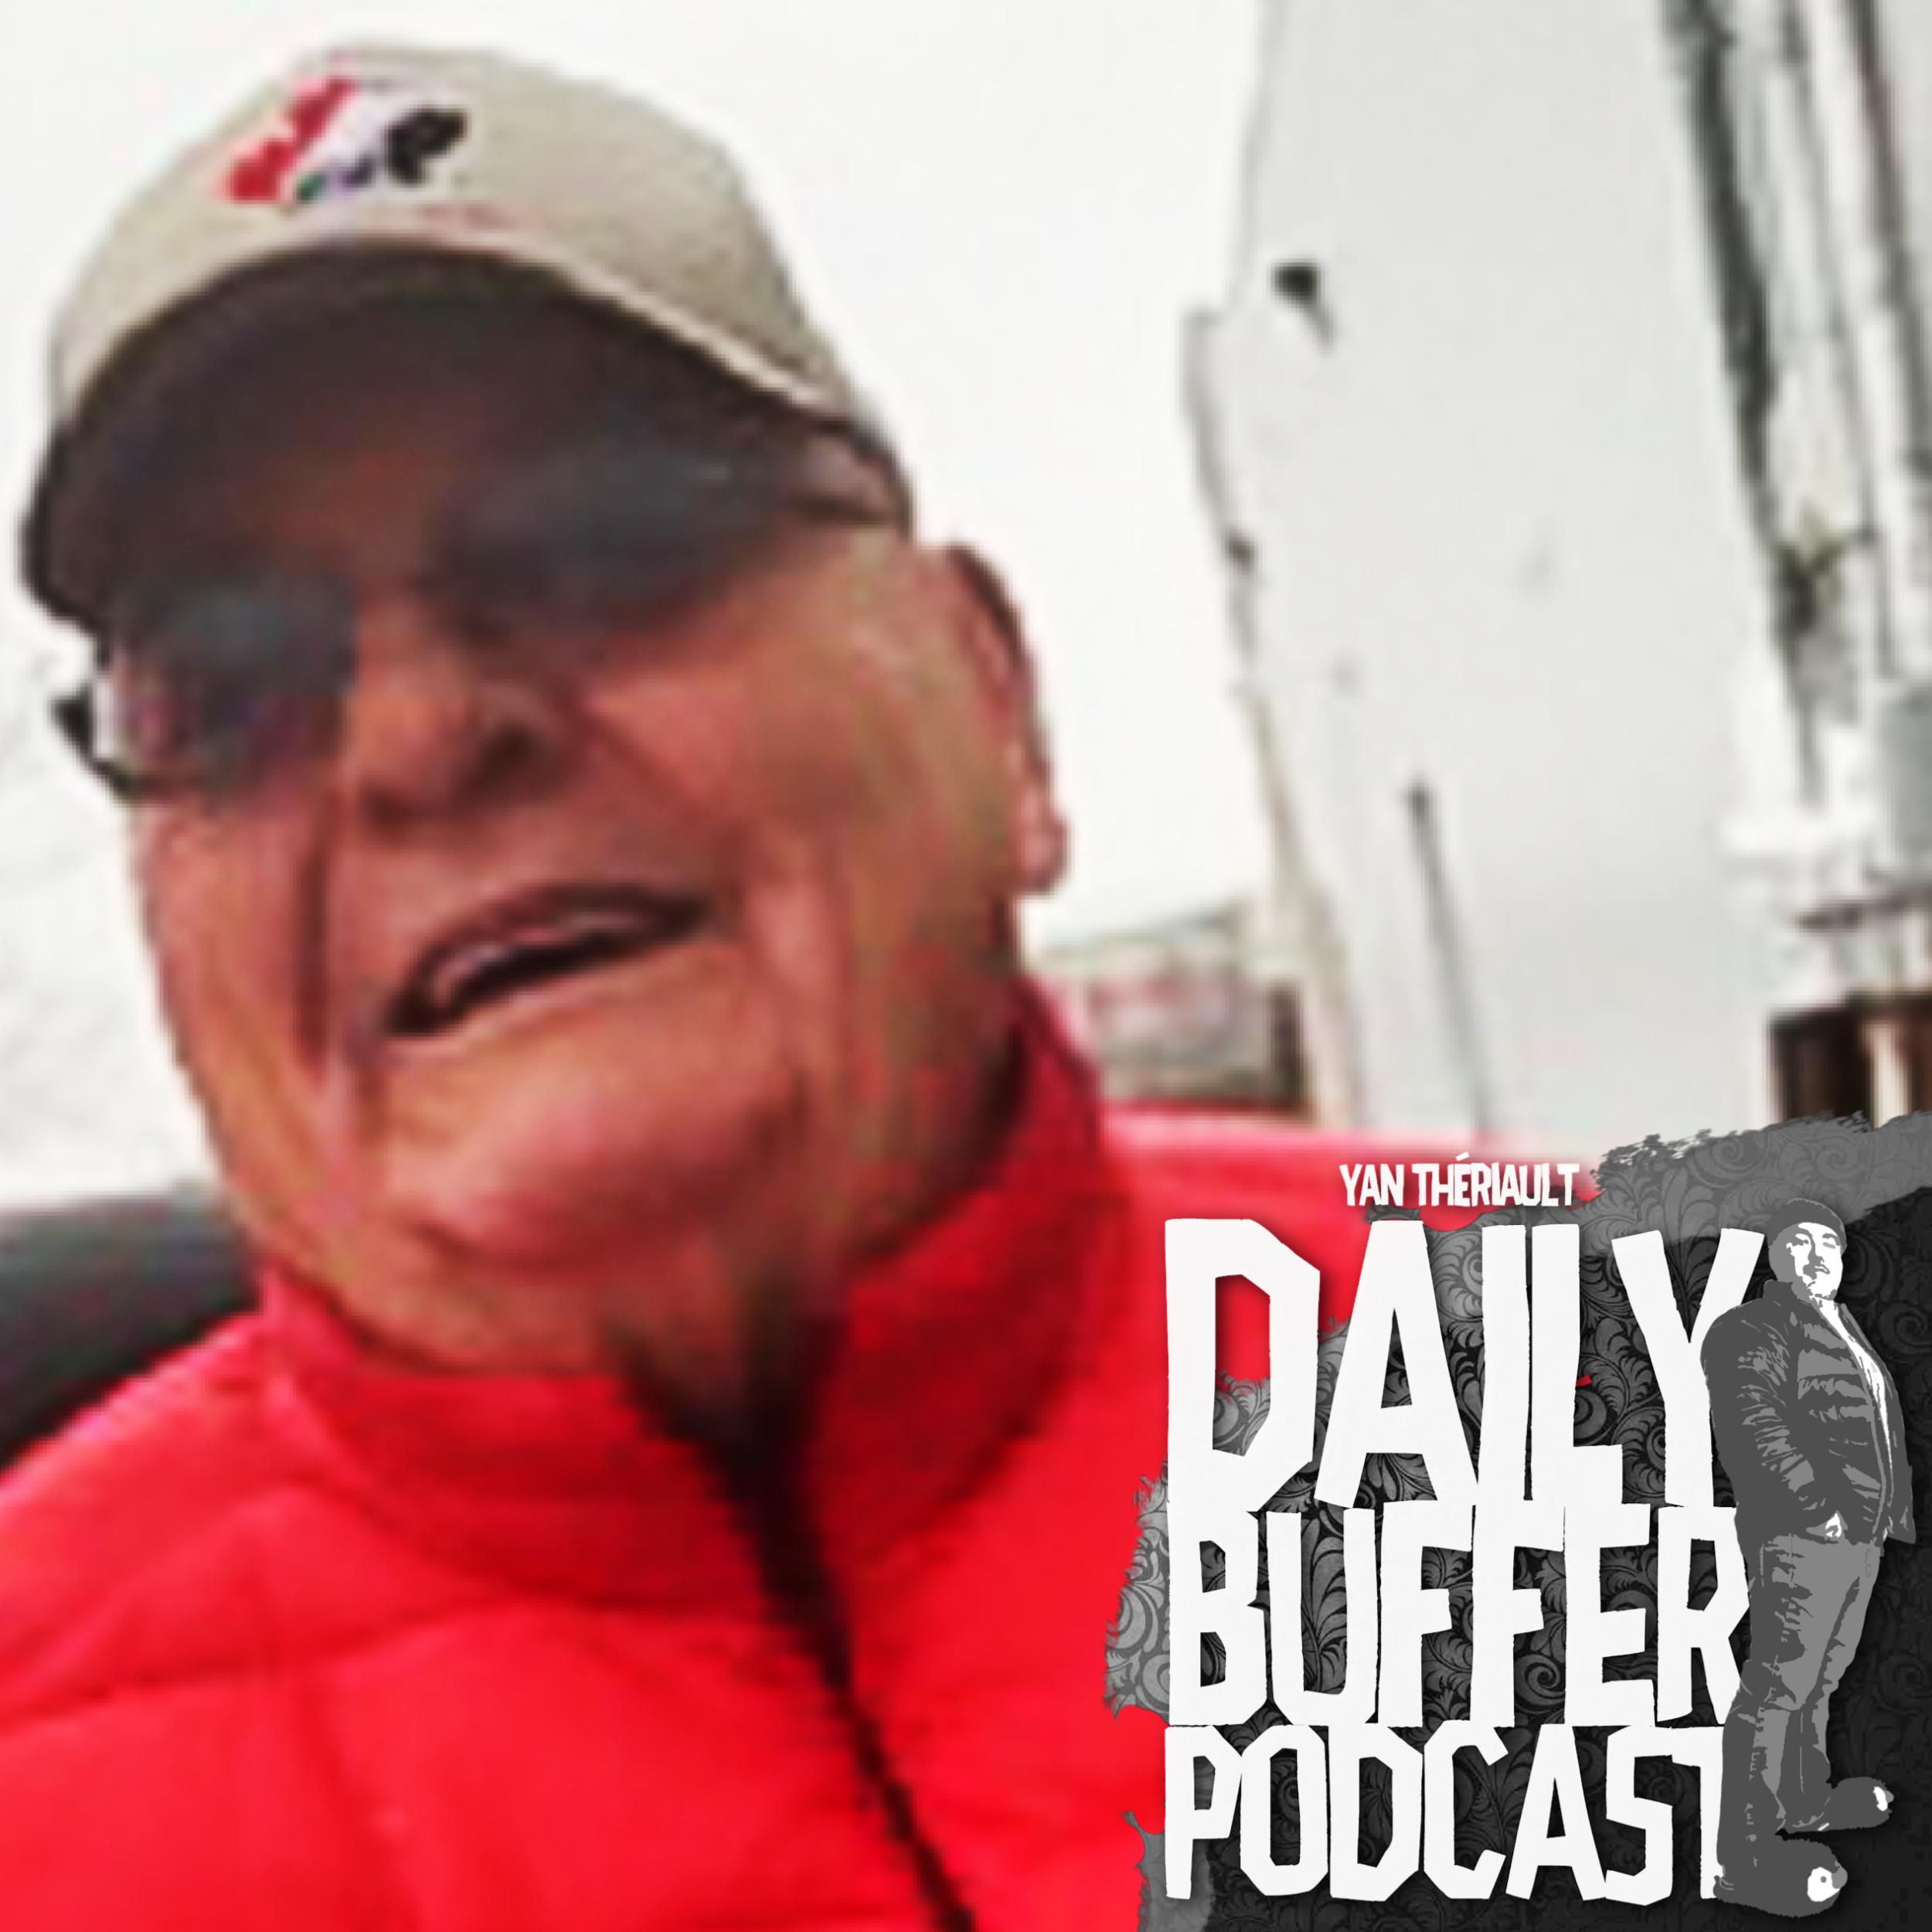 Il attaque les gens avec son triporteur - Le Daily Buffer Podcast - 2020 03